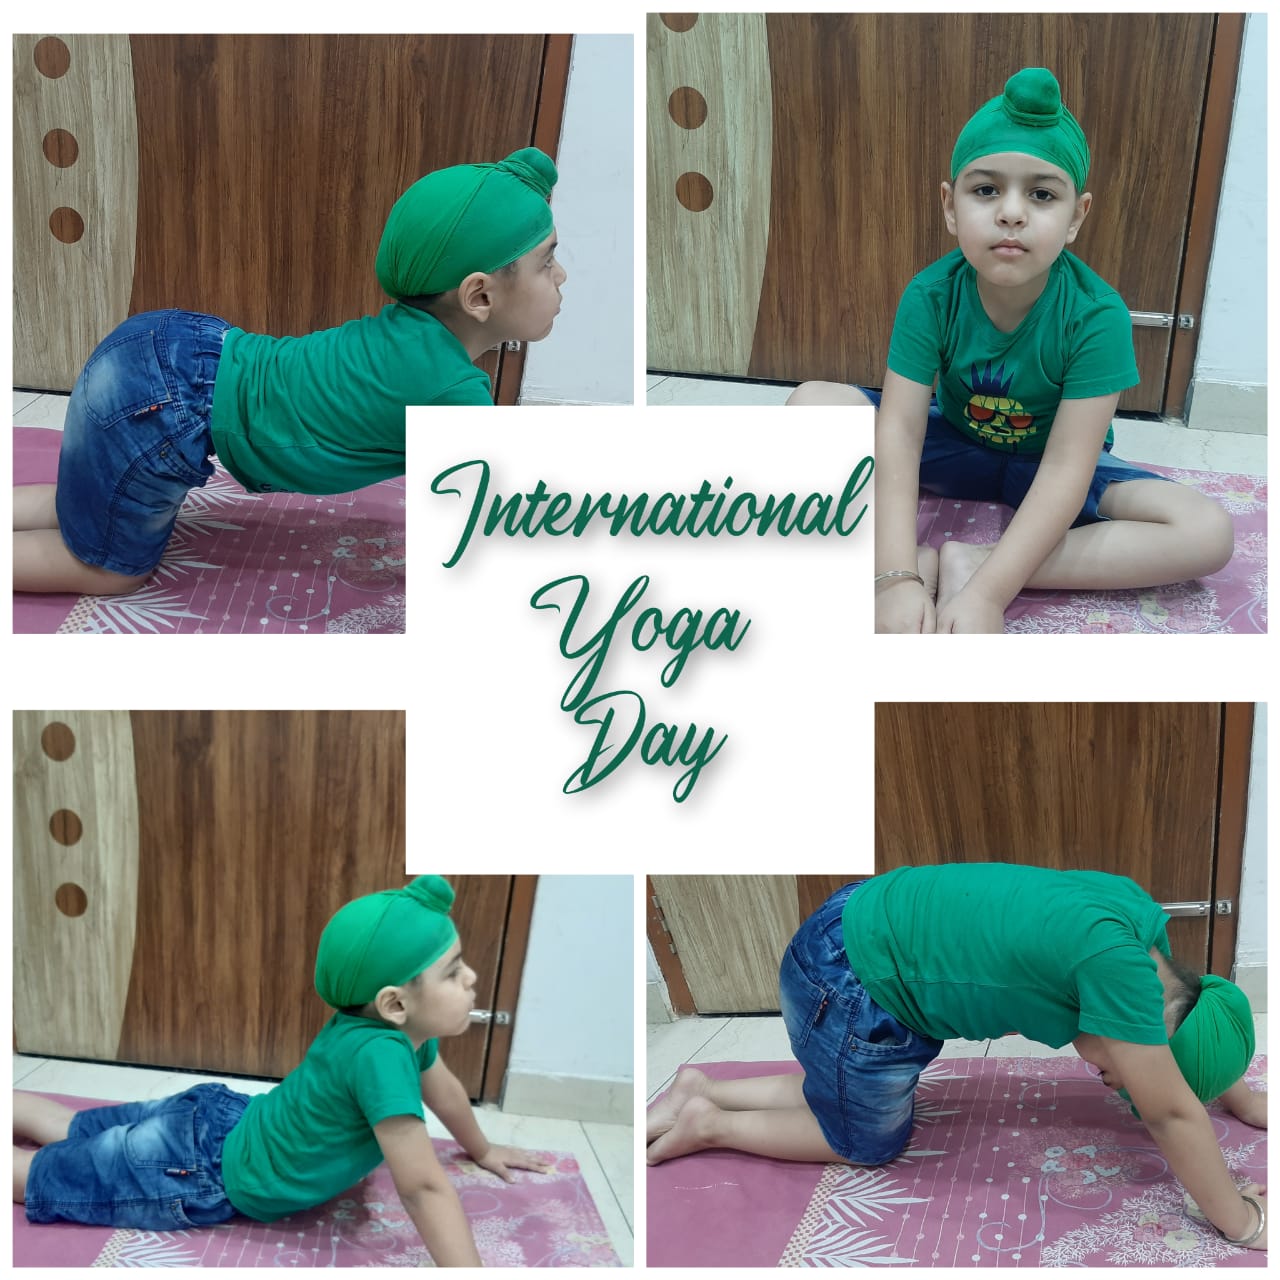 INTERNATIONAL YOGA DAY